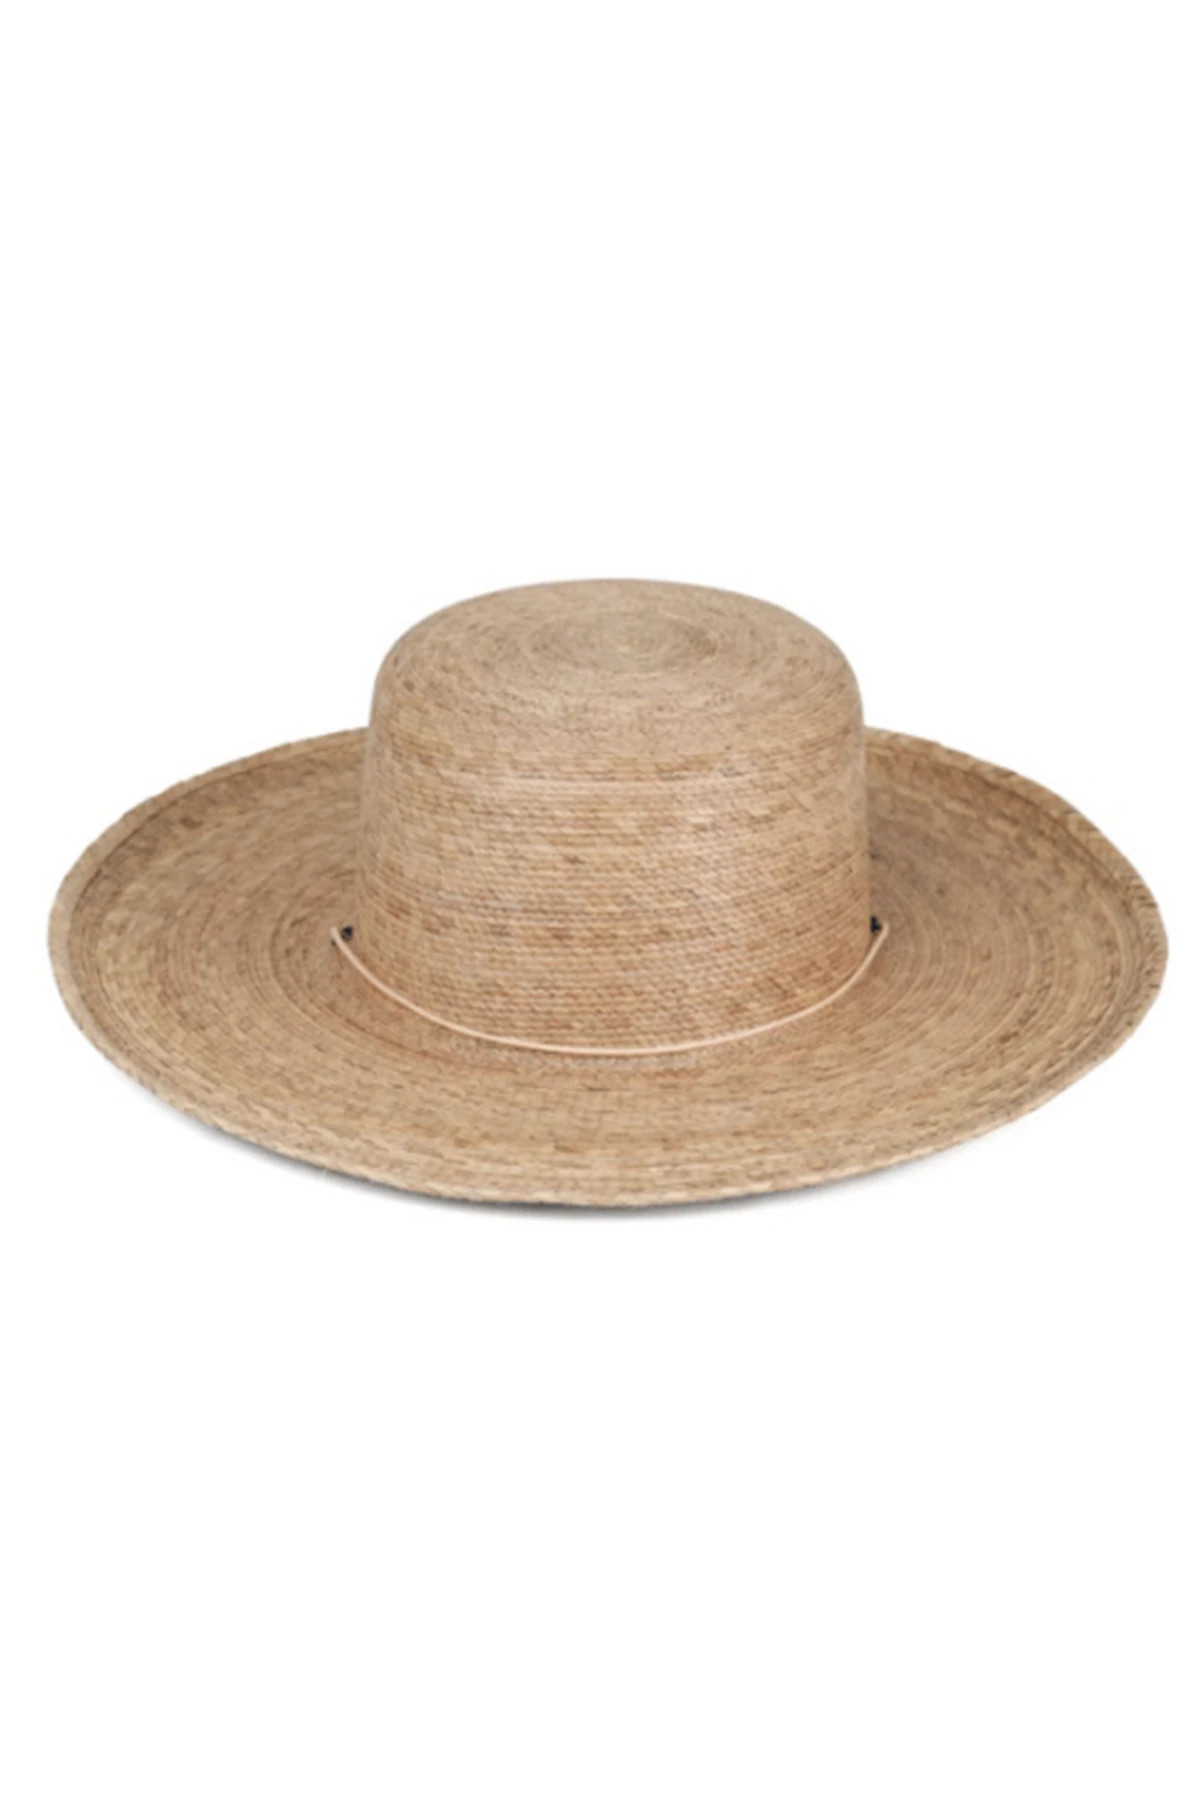 NATURAL Island Palma Boater Hat image number 1